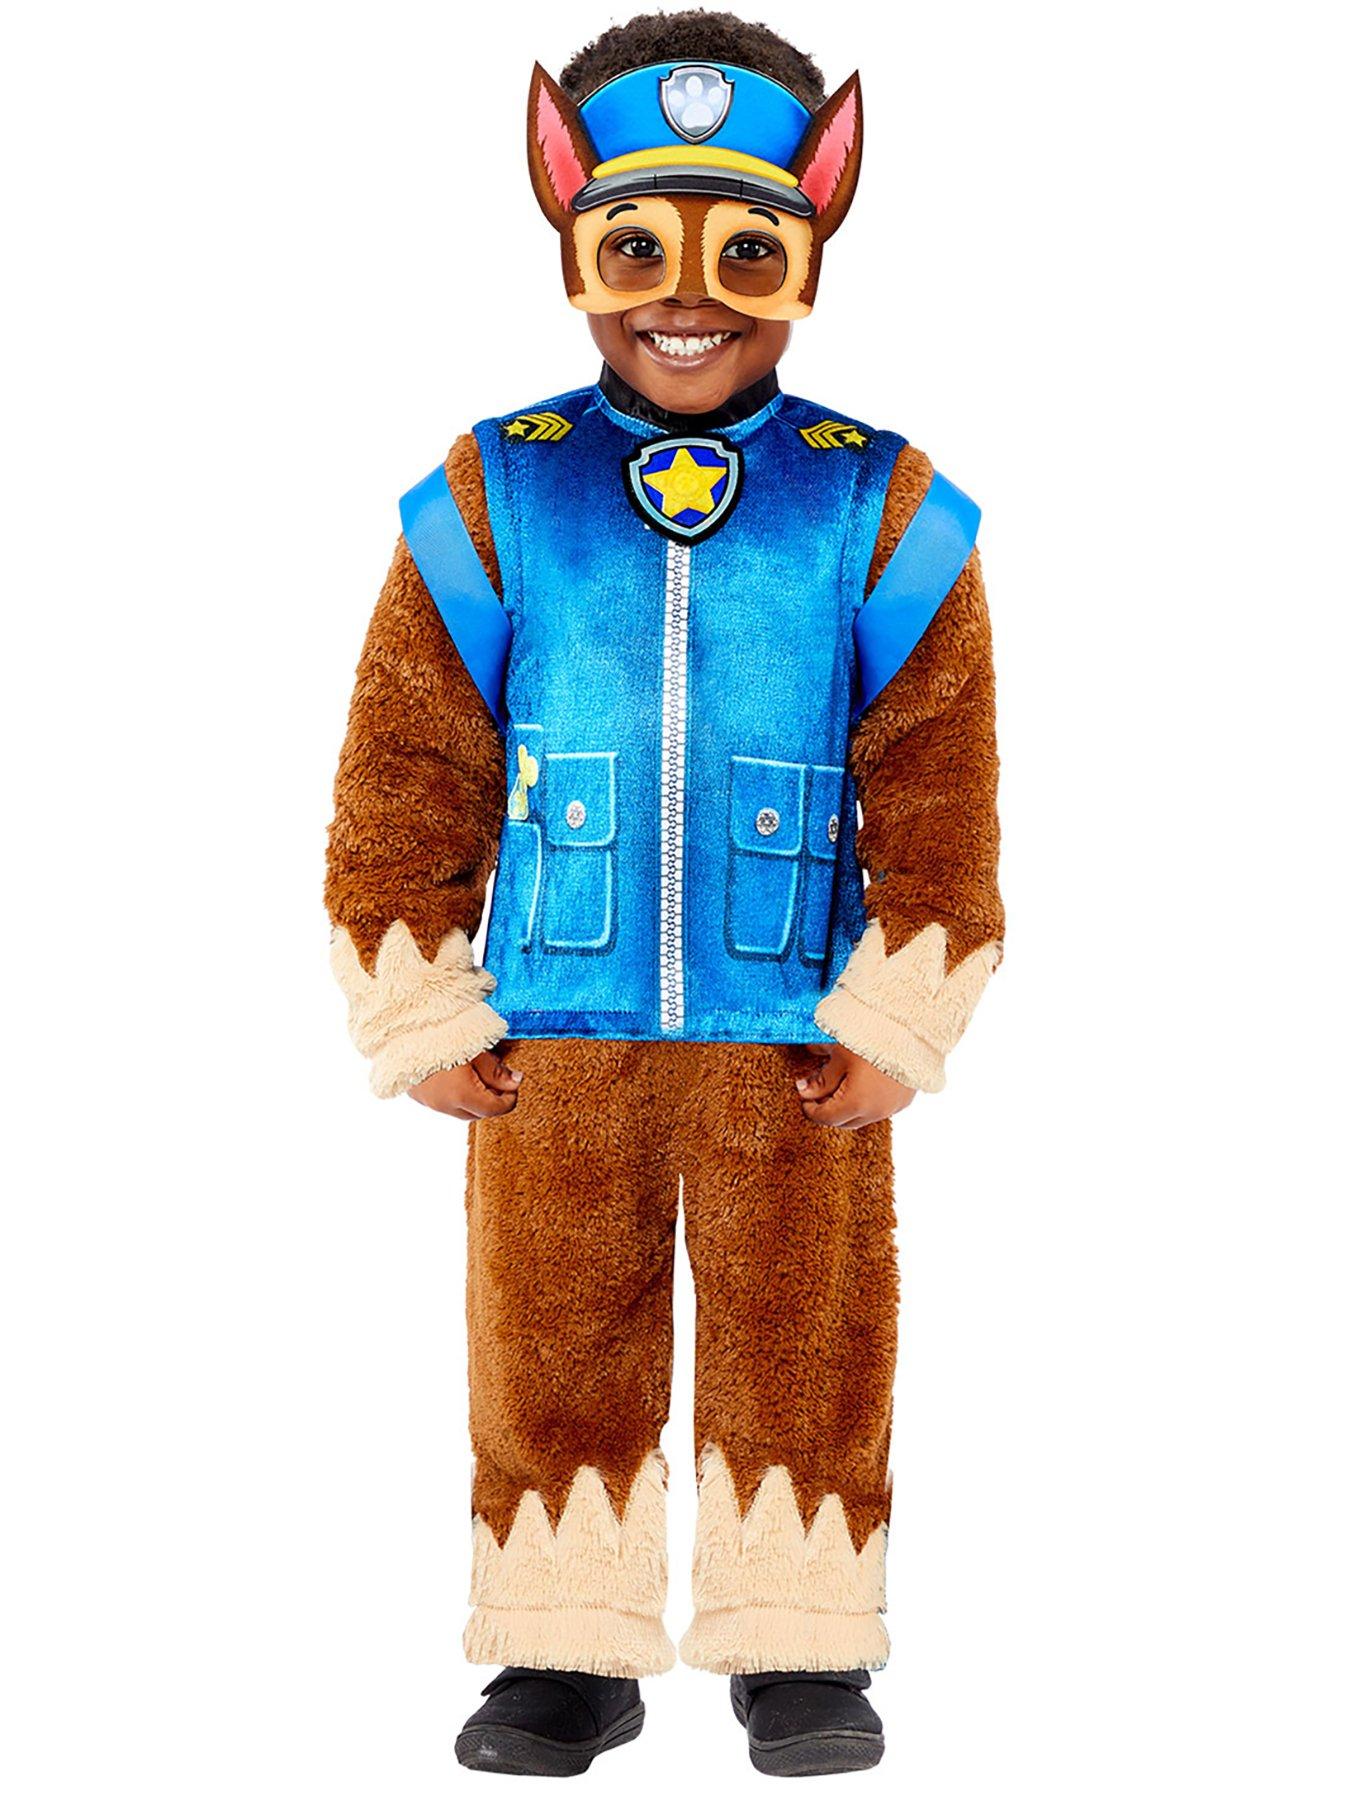 Paw patrol | Kids costumes | Toys | www.very.co.uk